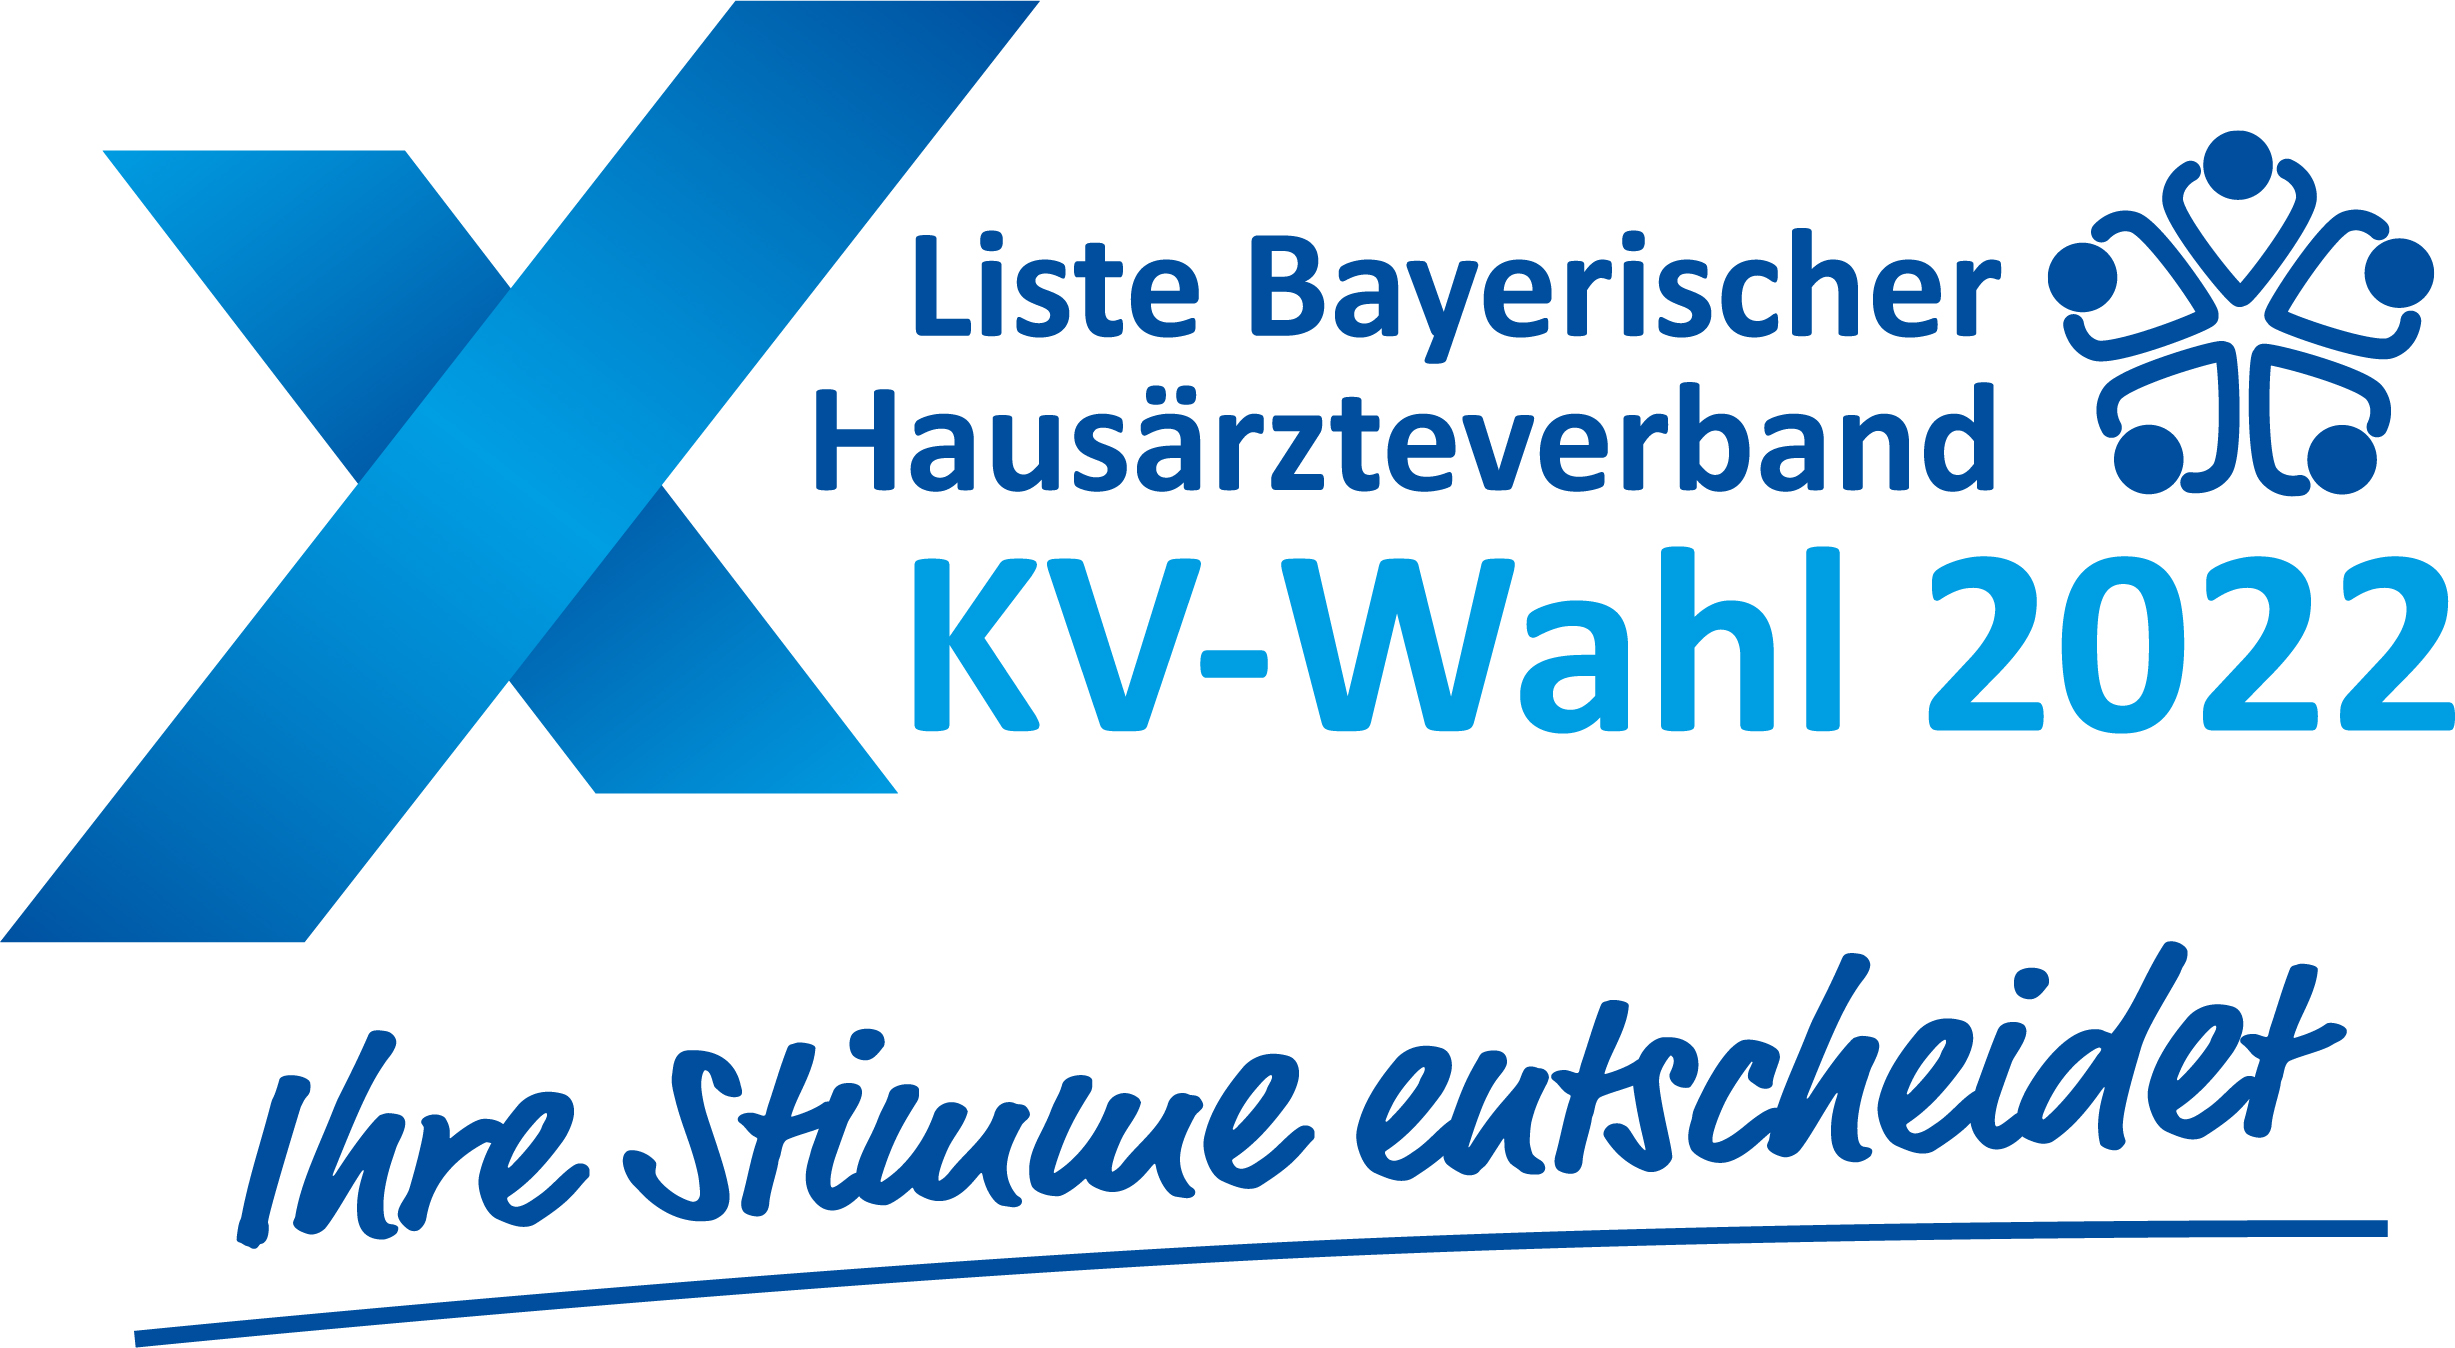 kvwahl2022 slogan logo2